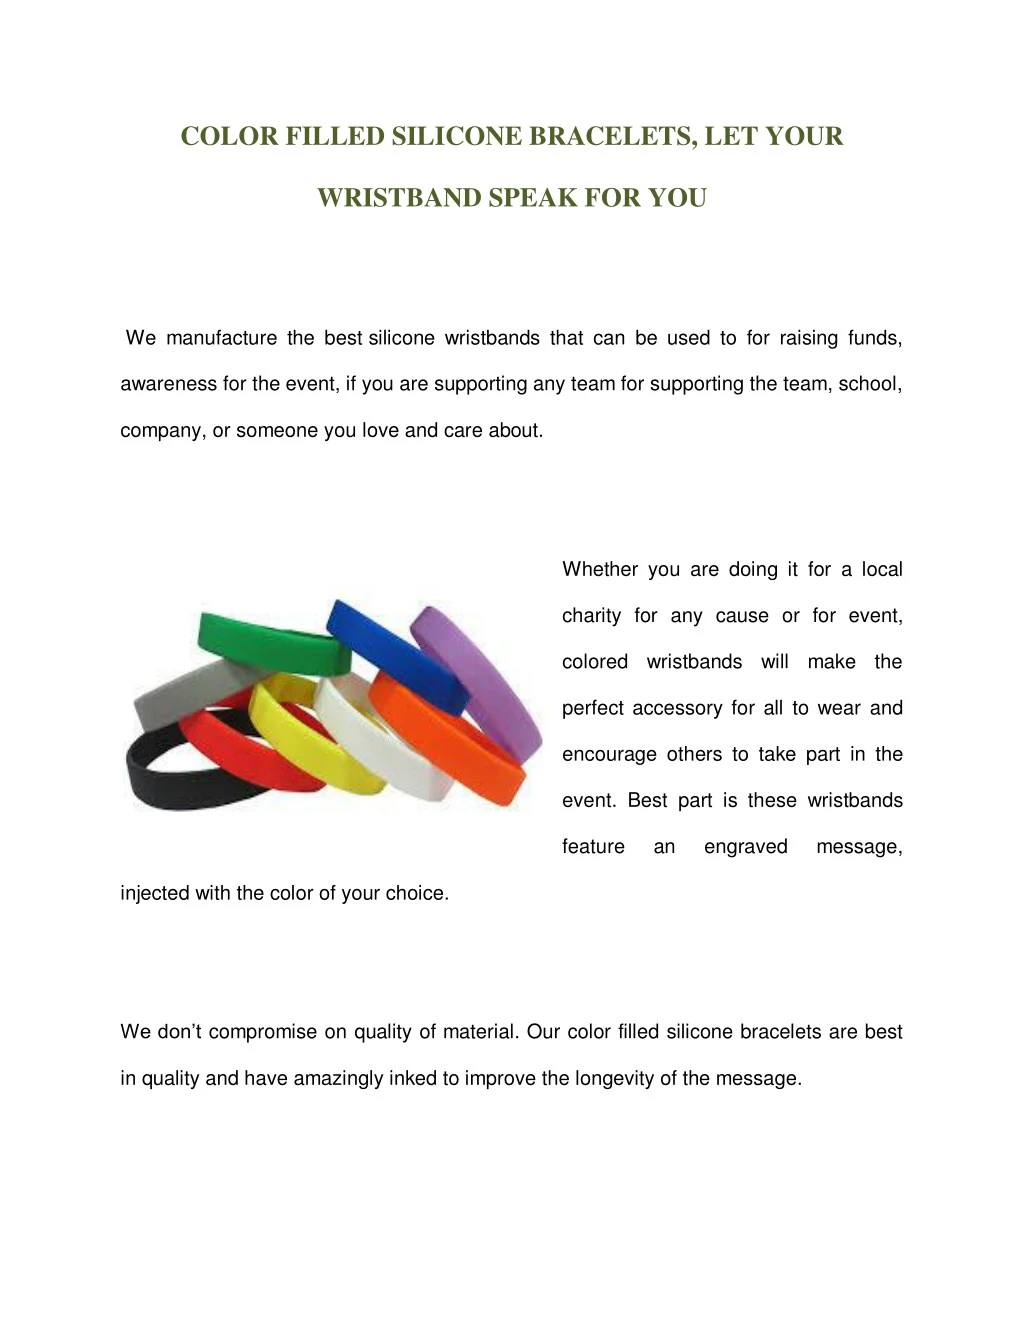 color filled silicone bracelets let your